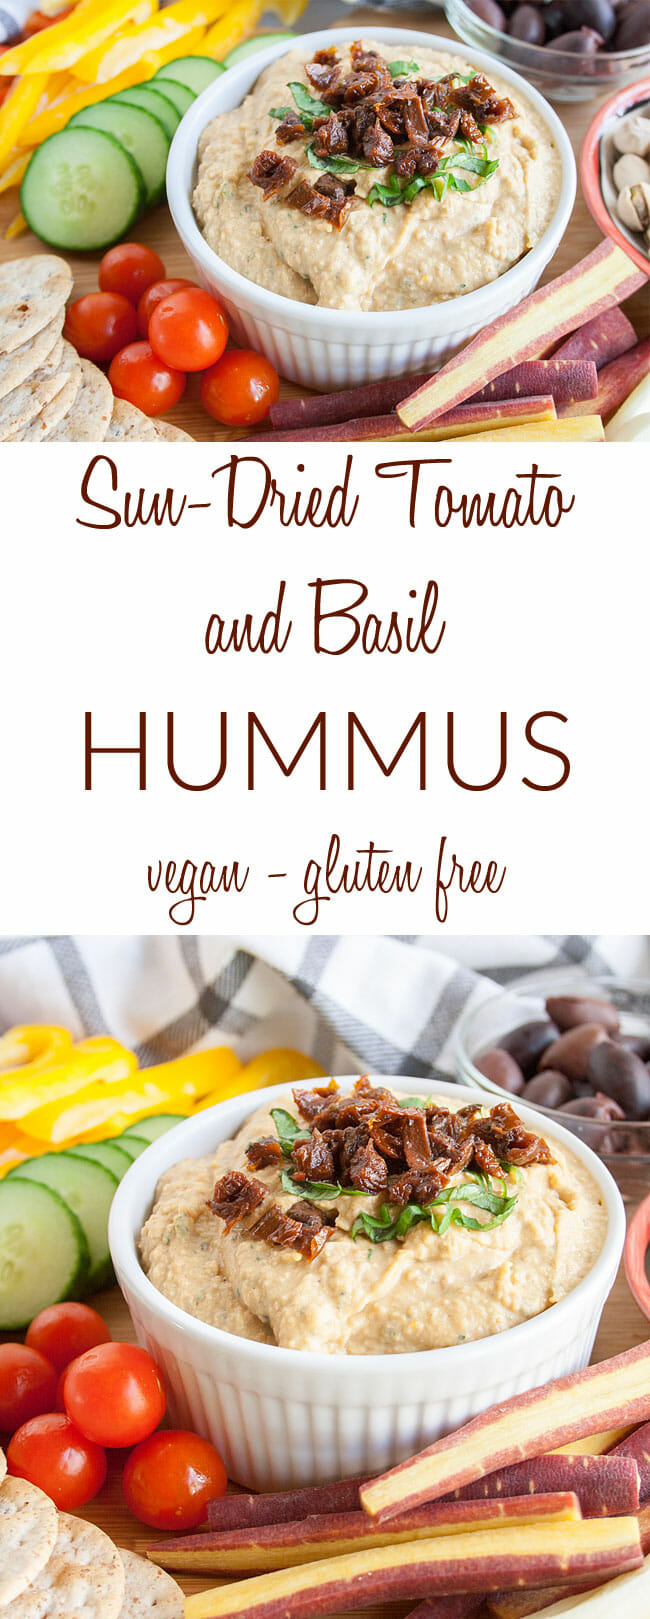 Vegan Hummus collage photo with text.